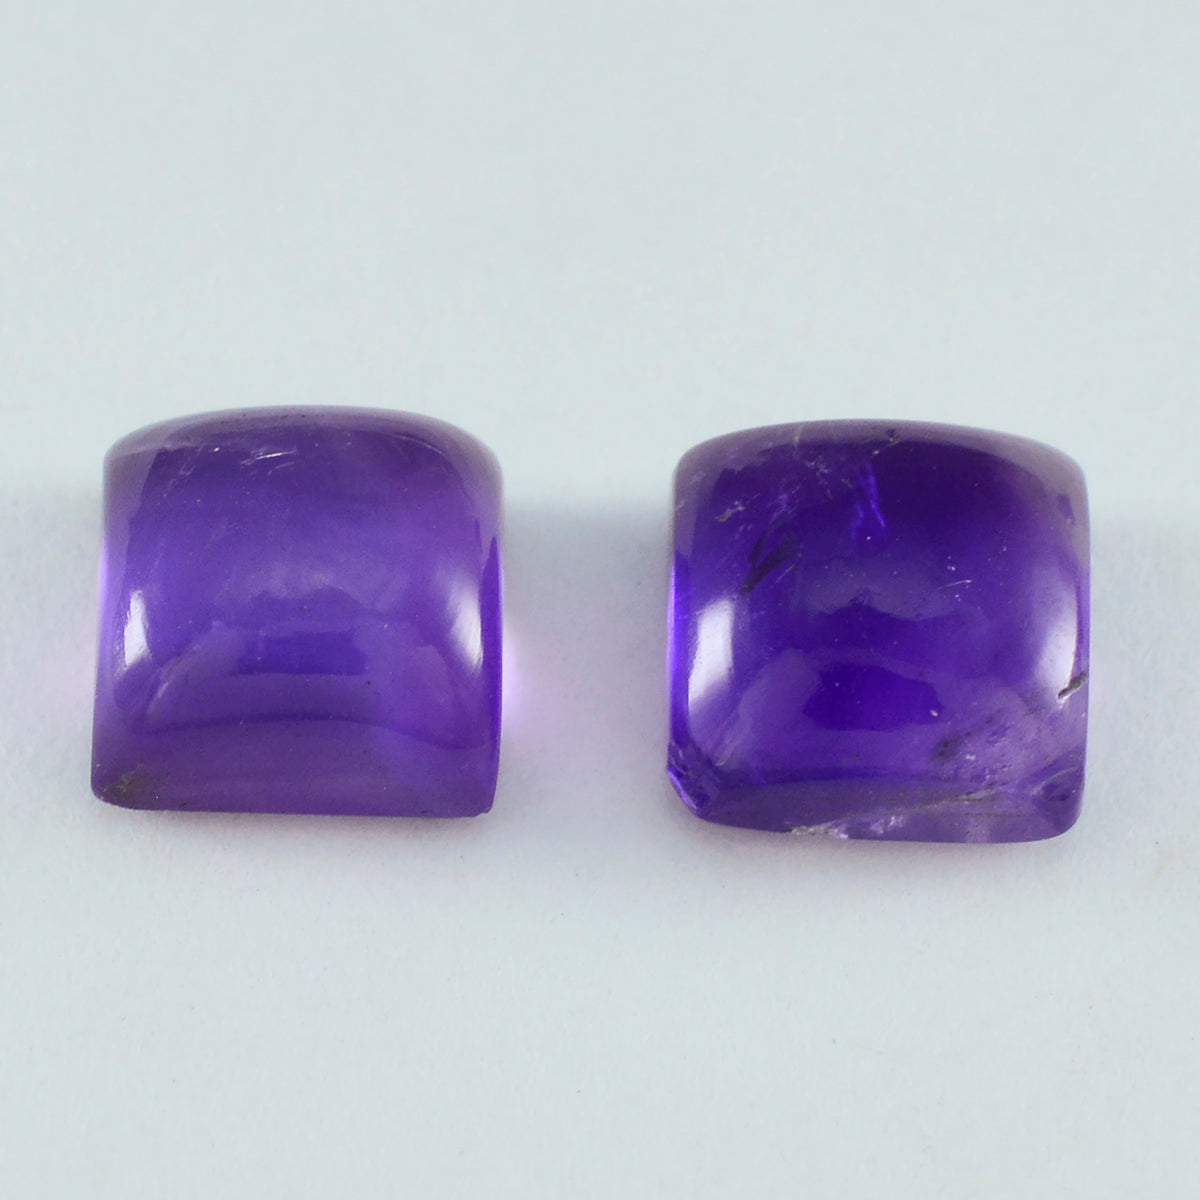 Riyogems 1PC Purple Amethyst Cabochon 15x15 mm Square Shape lovely Quality Stone